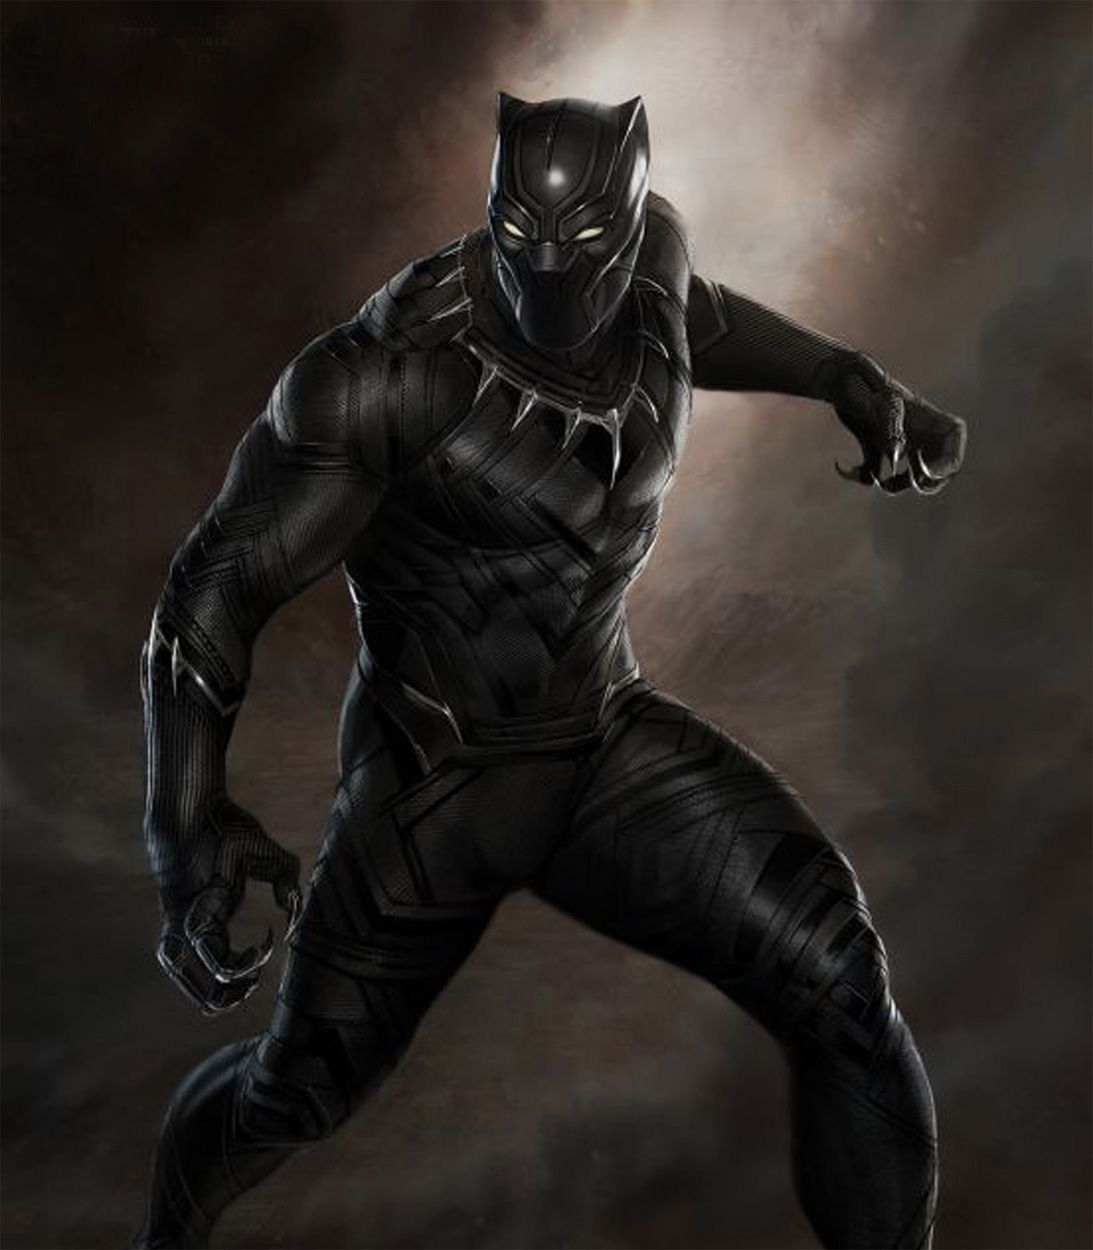 TLDR Black Panther